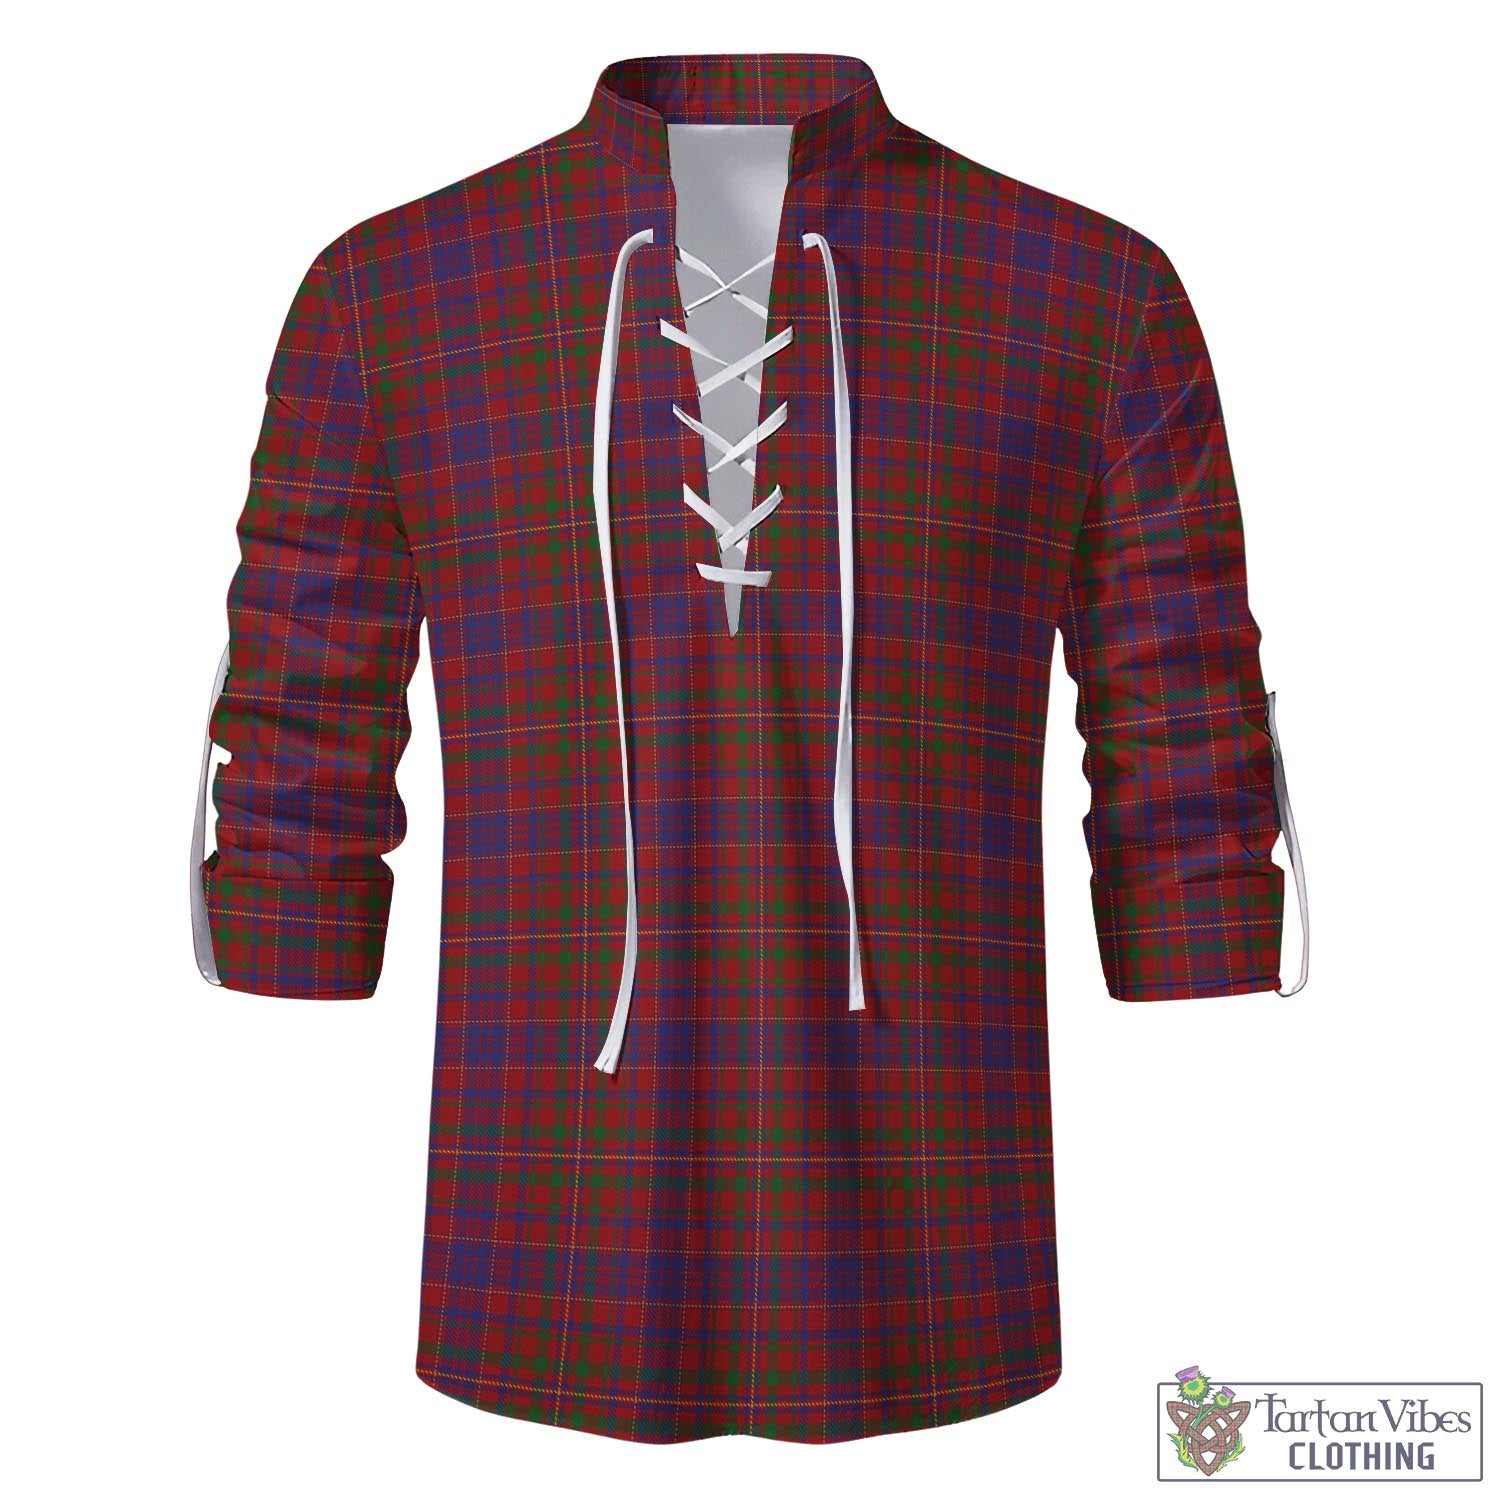 Tartan Vibes Clothing MacLeod Red Tartan Men's Scottish Traditional Jacobite Ghillie Kilt Shirt